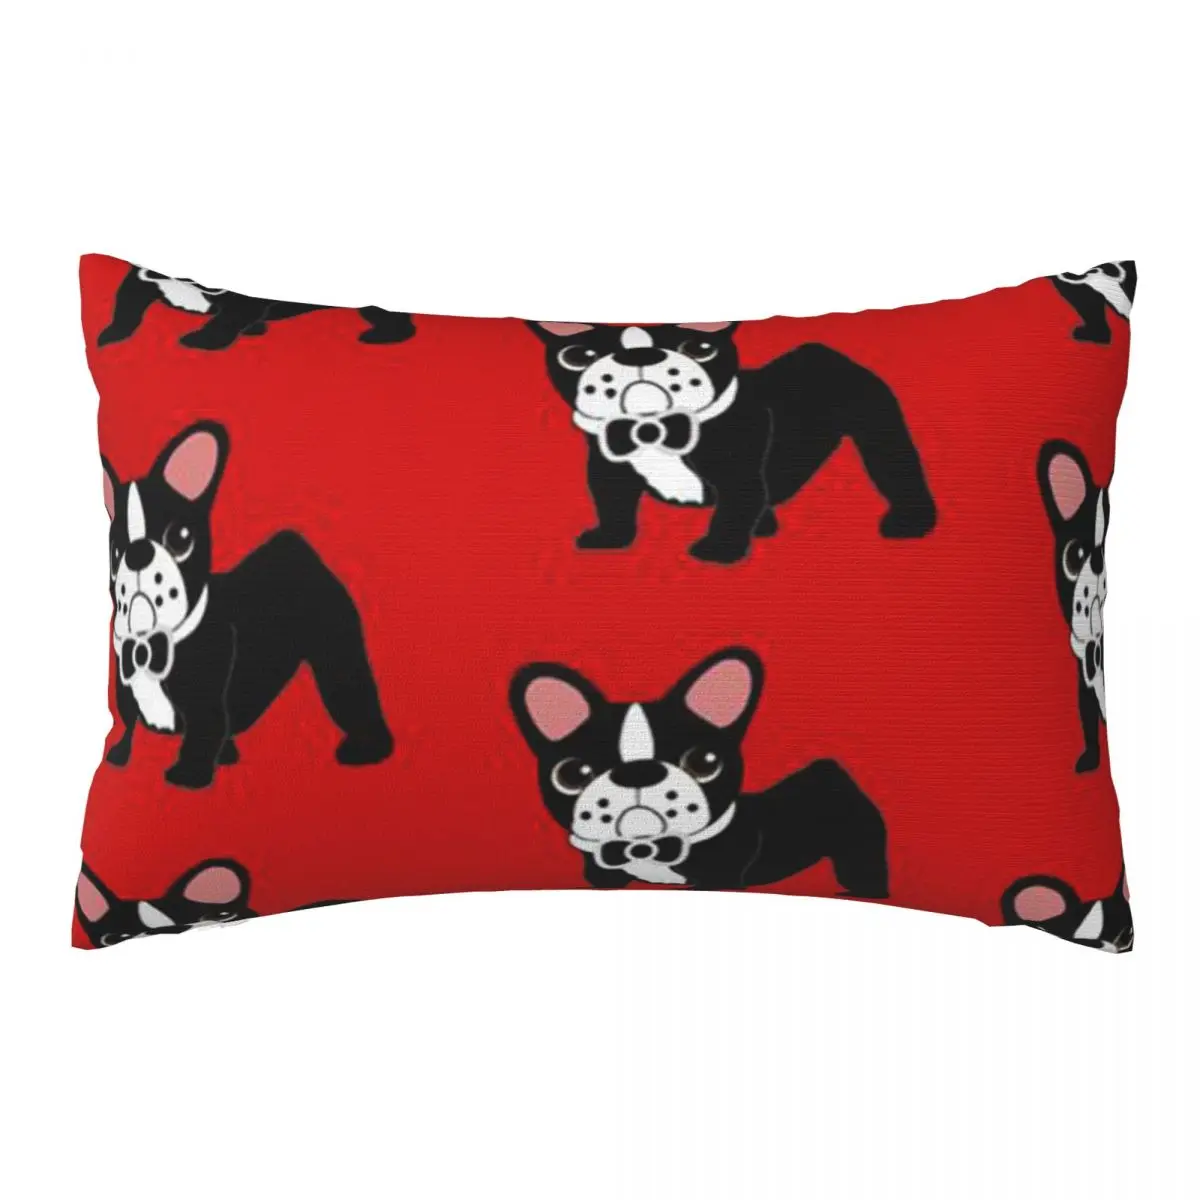 

Boston Terrier Dog Decorative Pillow Covers Throw Pillow Cover Home Pillows Shells Cushion Cover Zippered Pillowcase